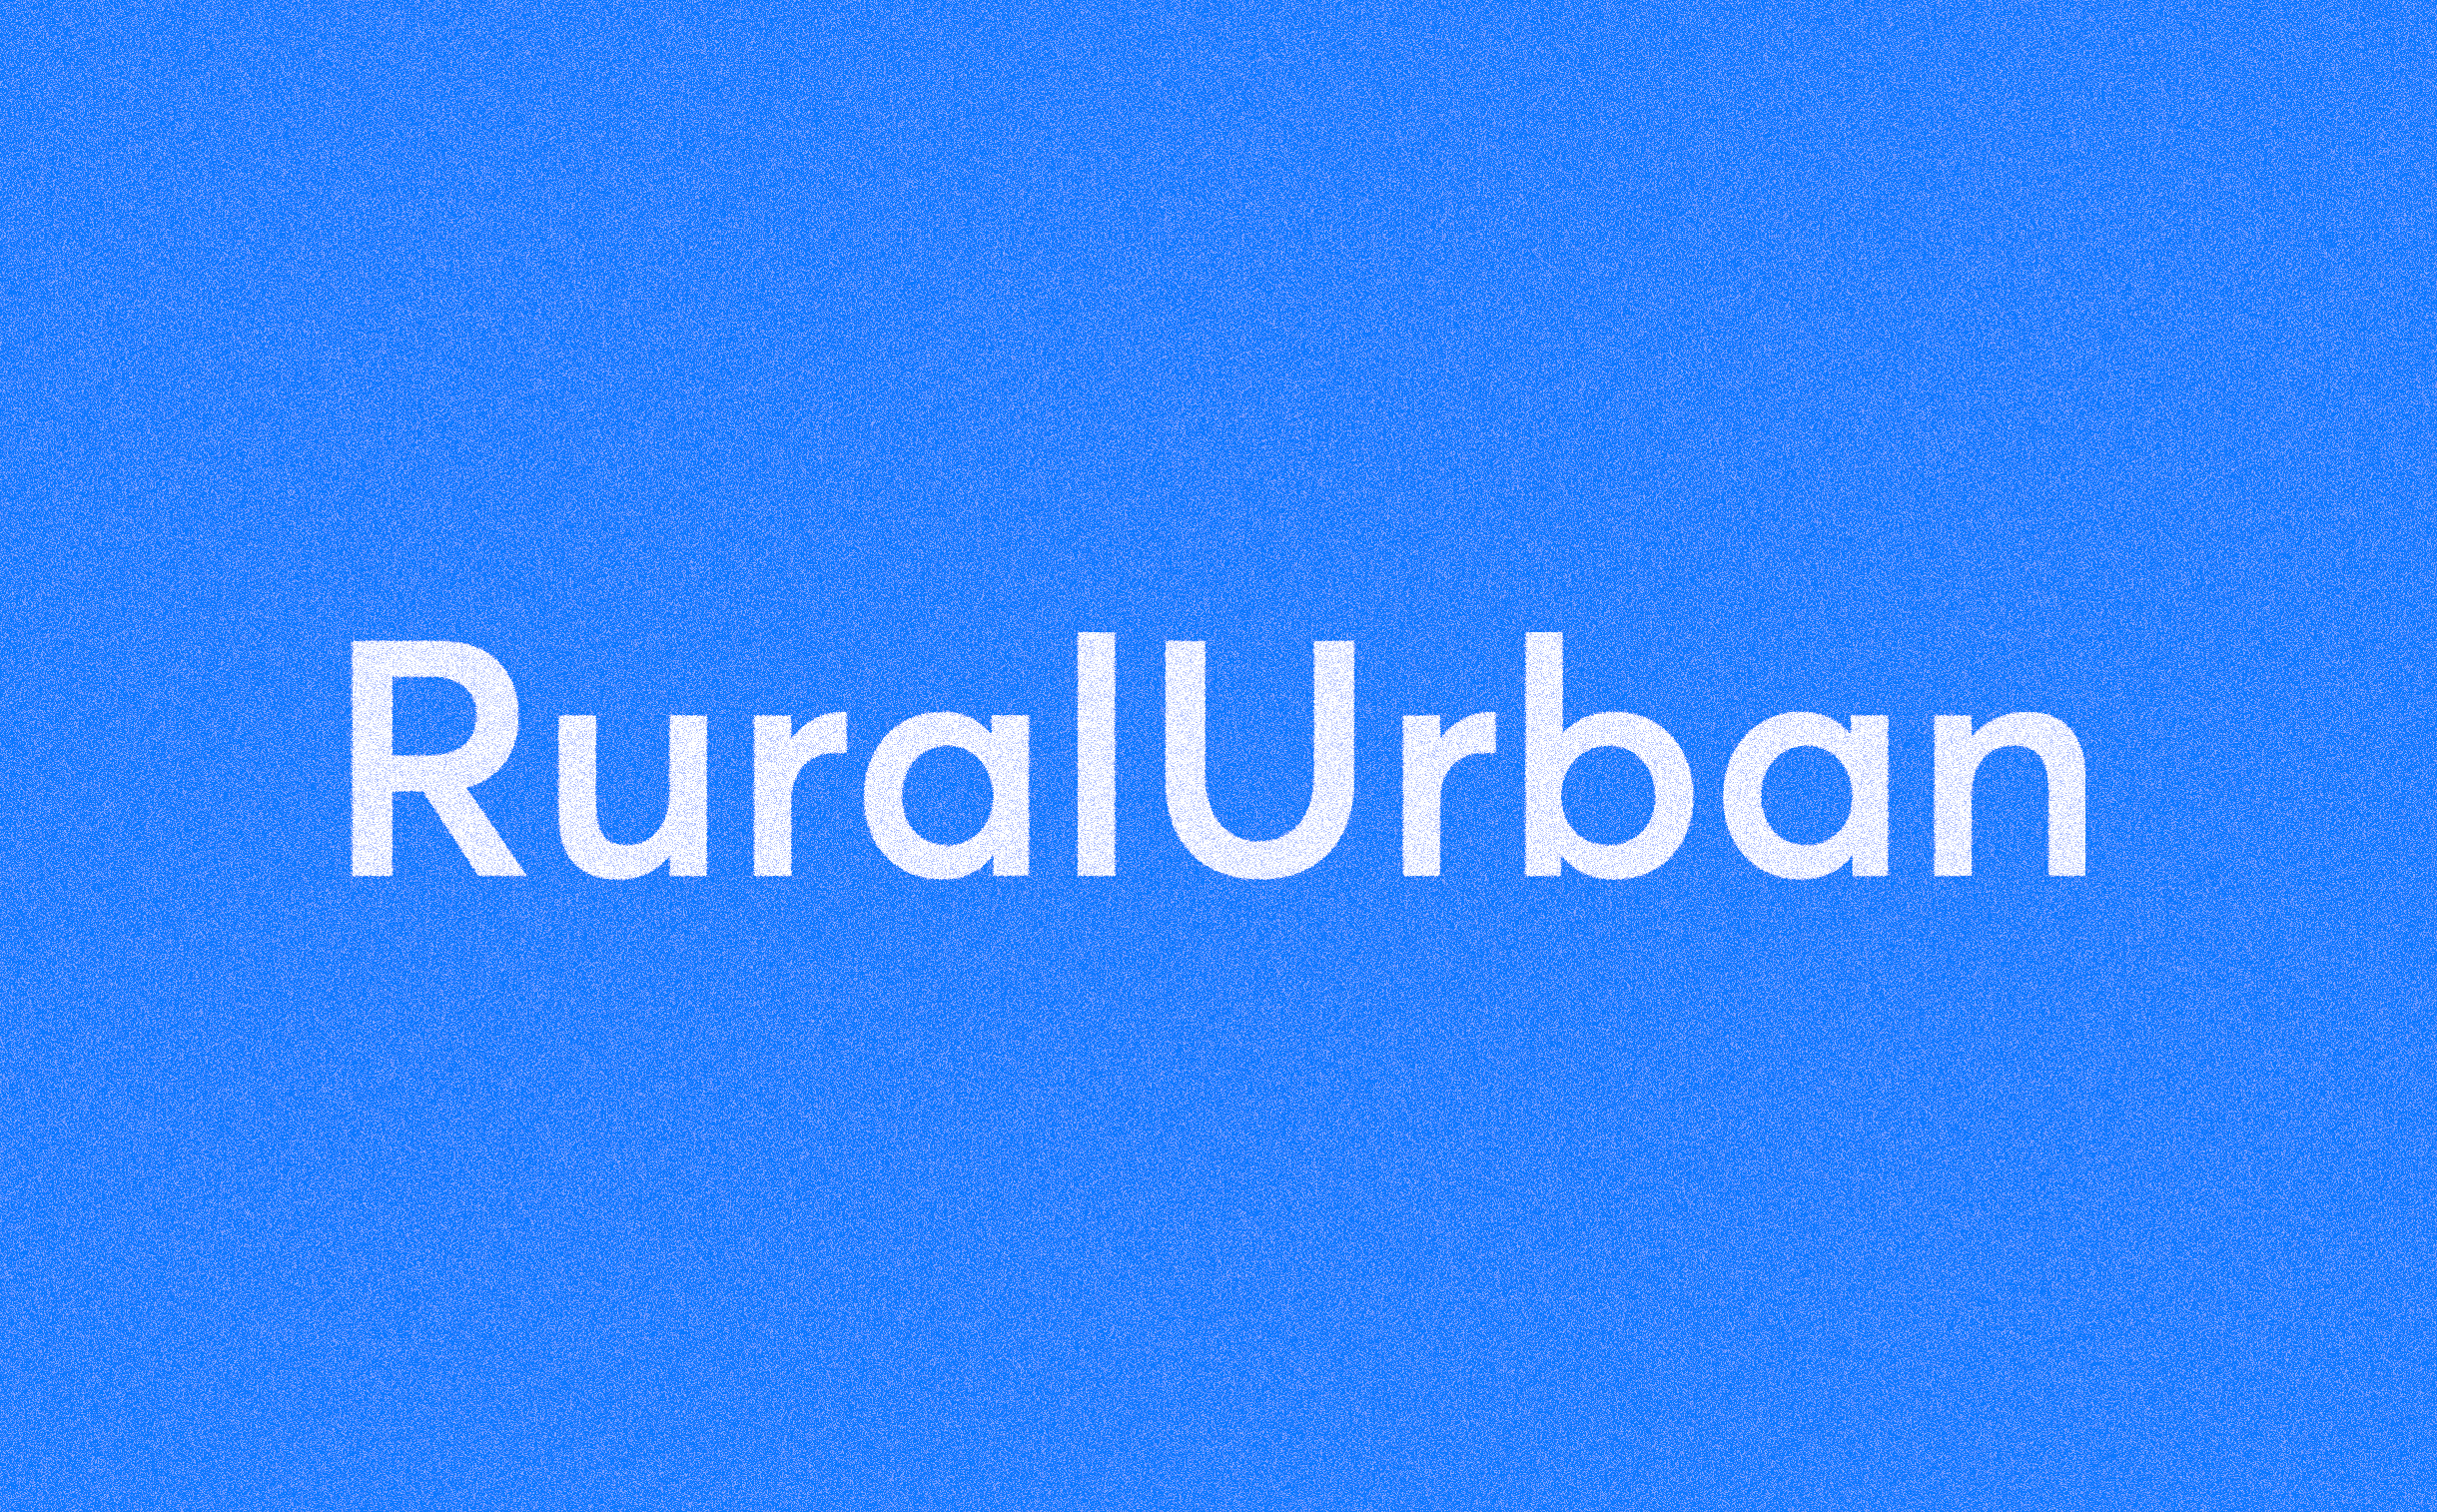 RuralUrban logo.